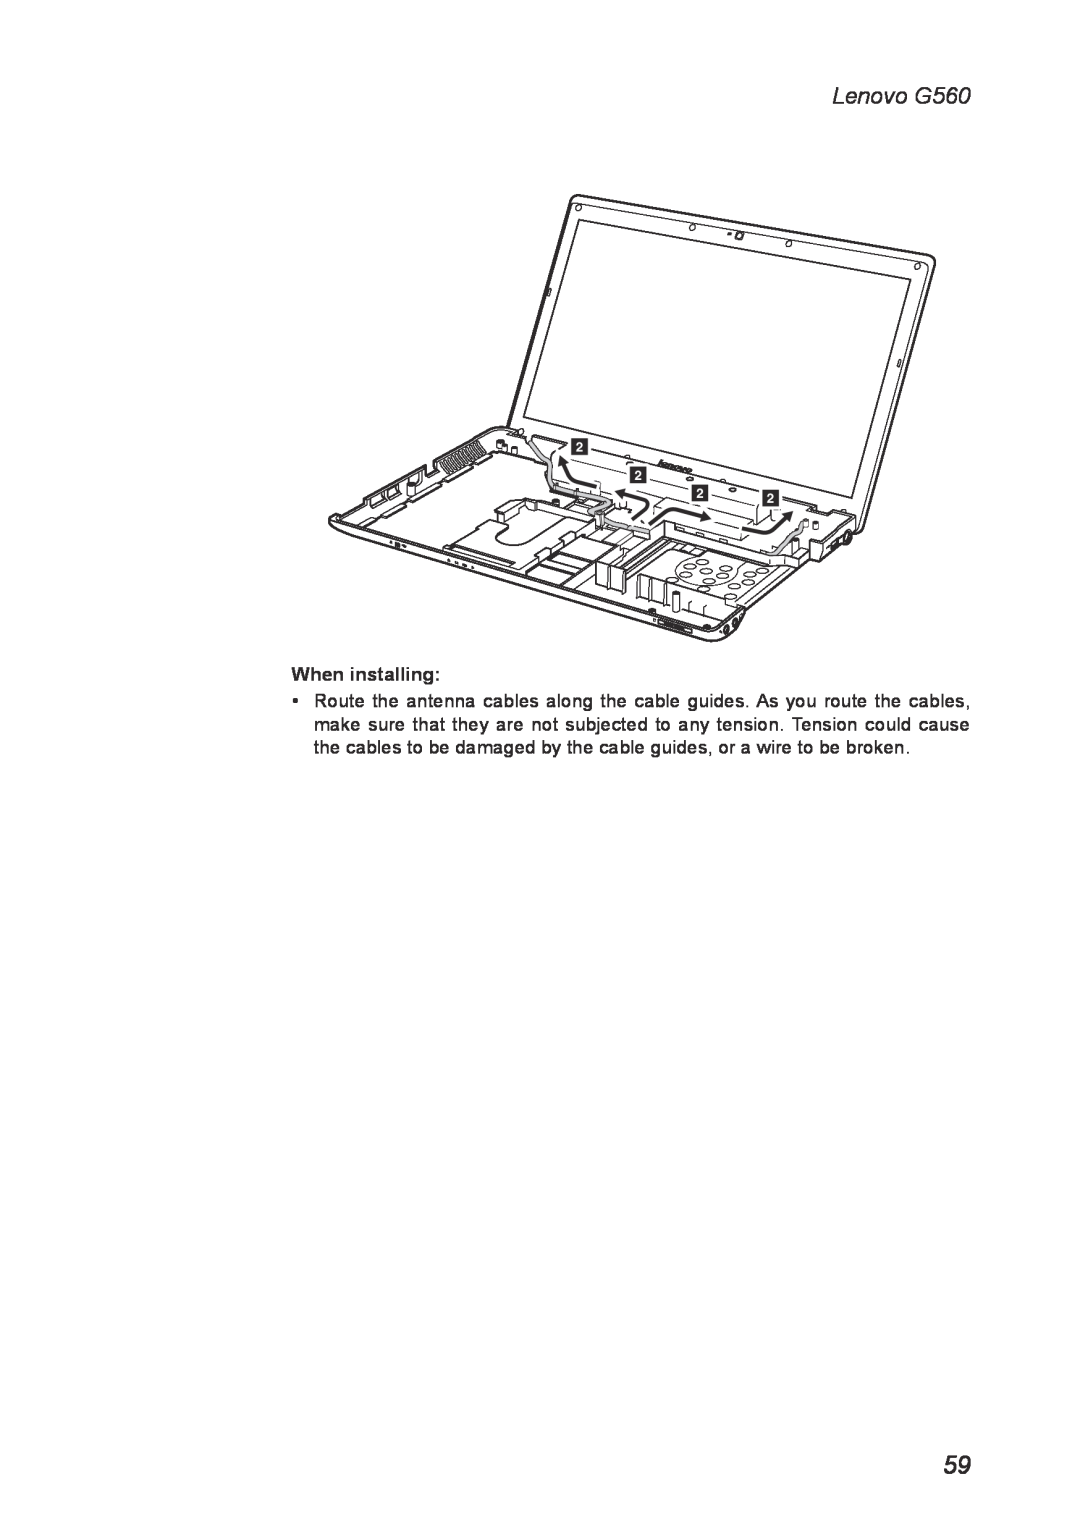 Lenovo manual Lenovo G560, When installing 